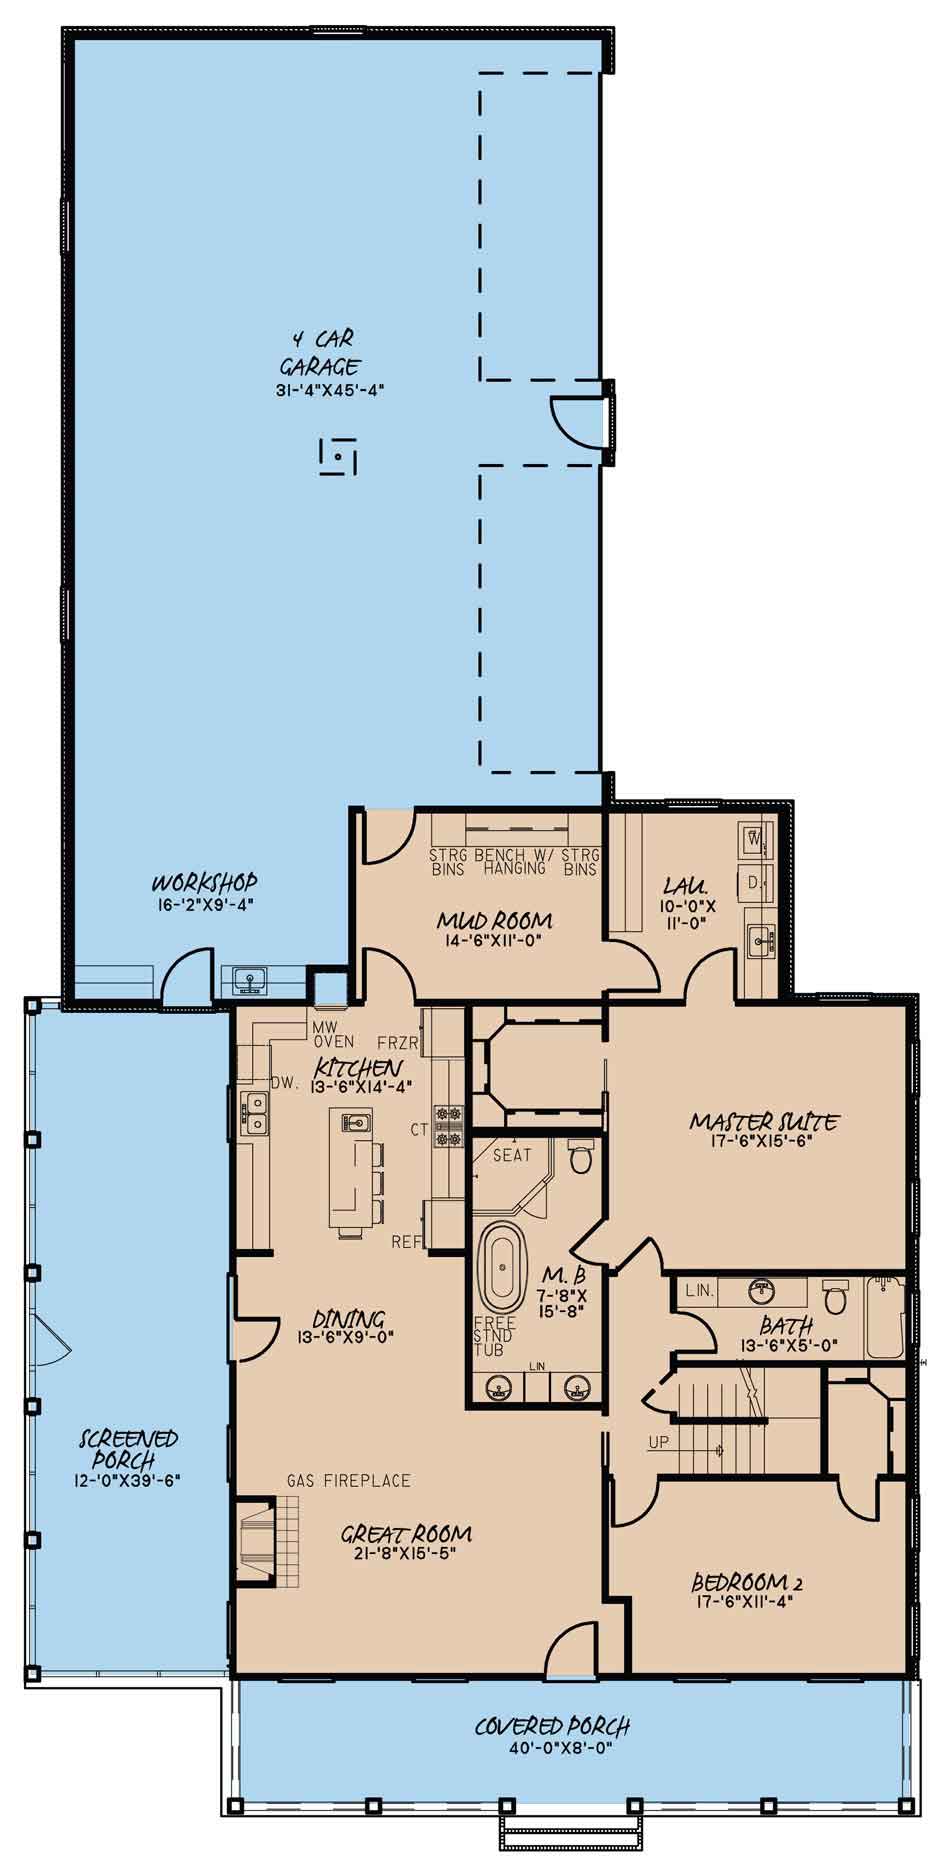 House Plan MEN 5088 Main Floor